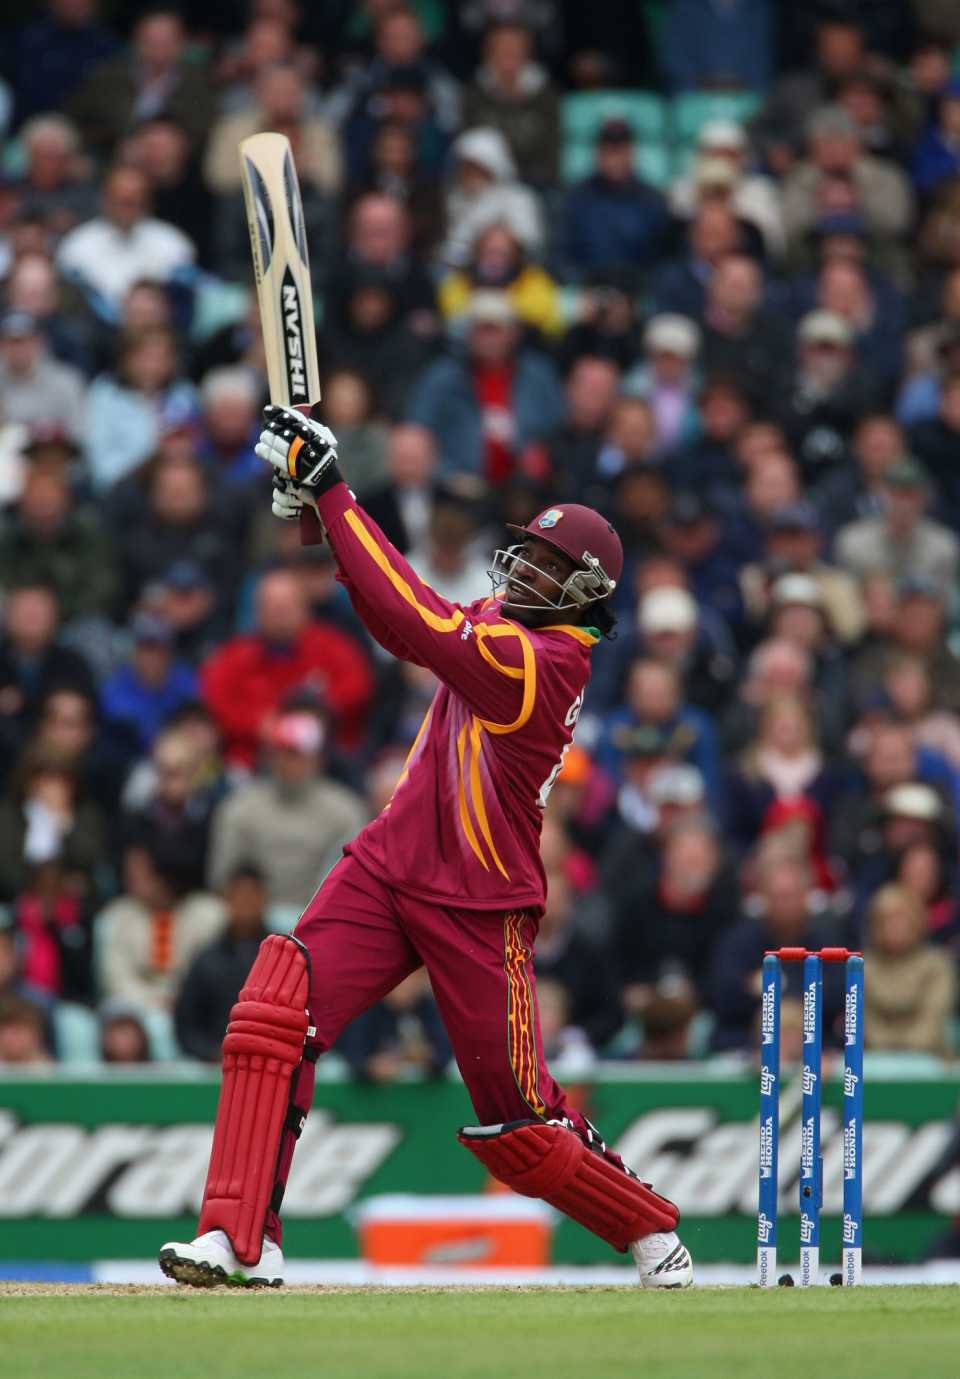 Chris Gayle hits a six, Australia v West Indies, ICC World Twenty20, The Oval, June 6, 2009